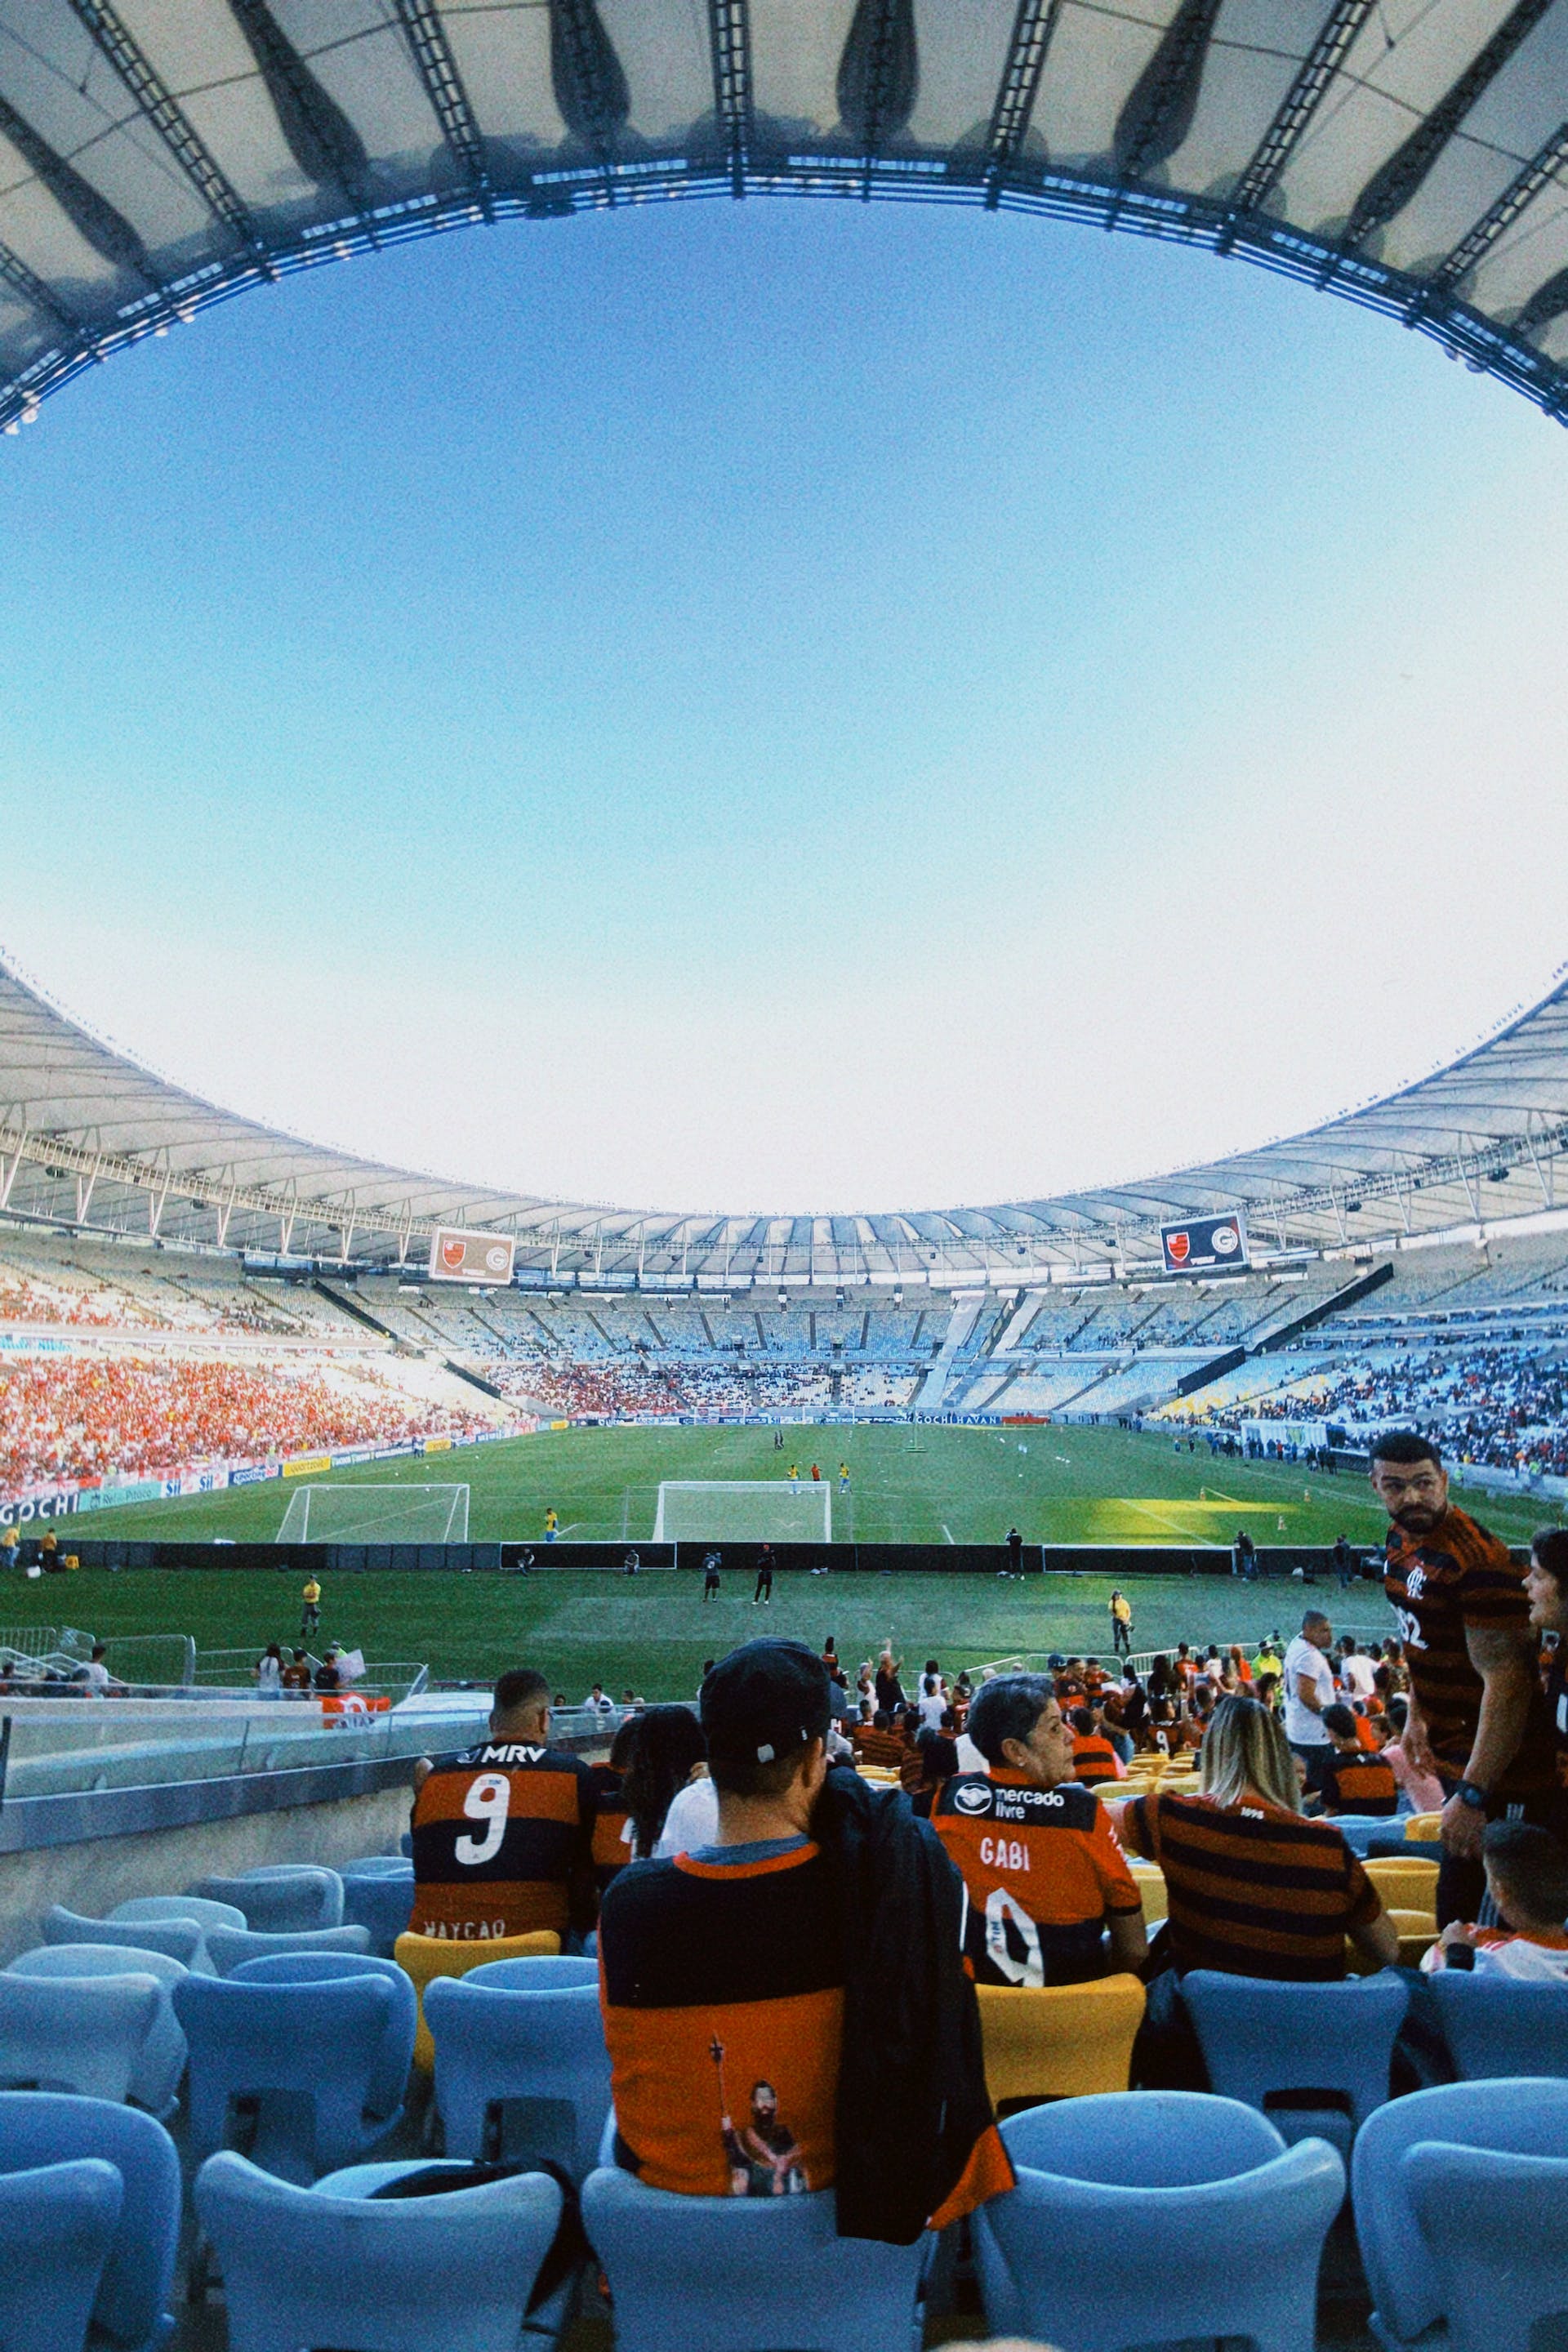 Seats in a stadium | Source: Pexels